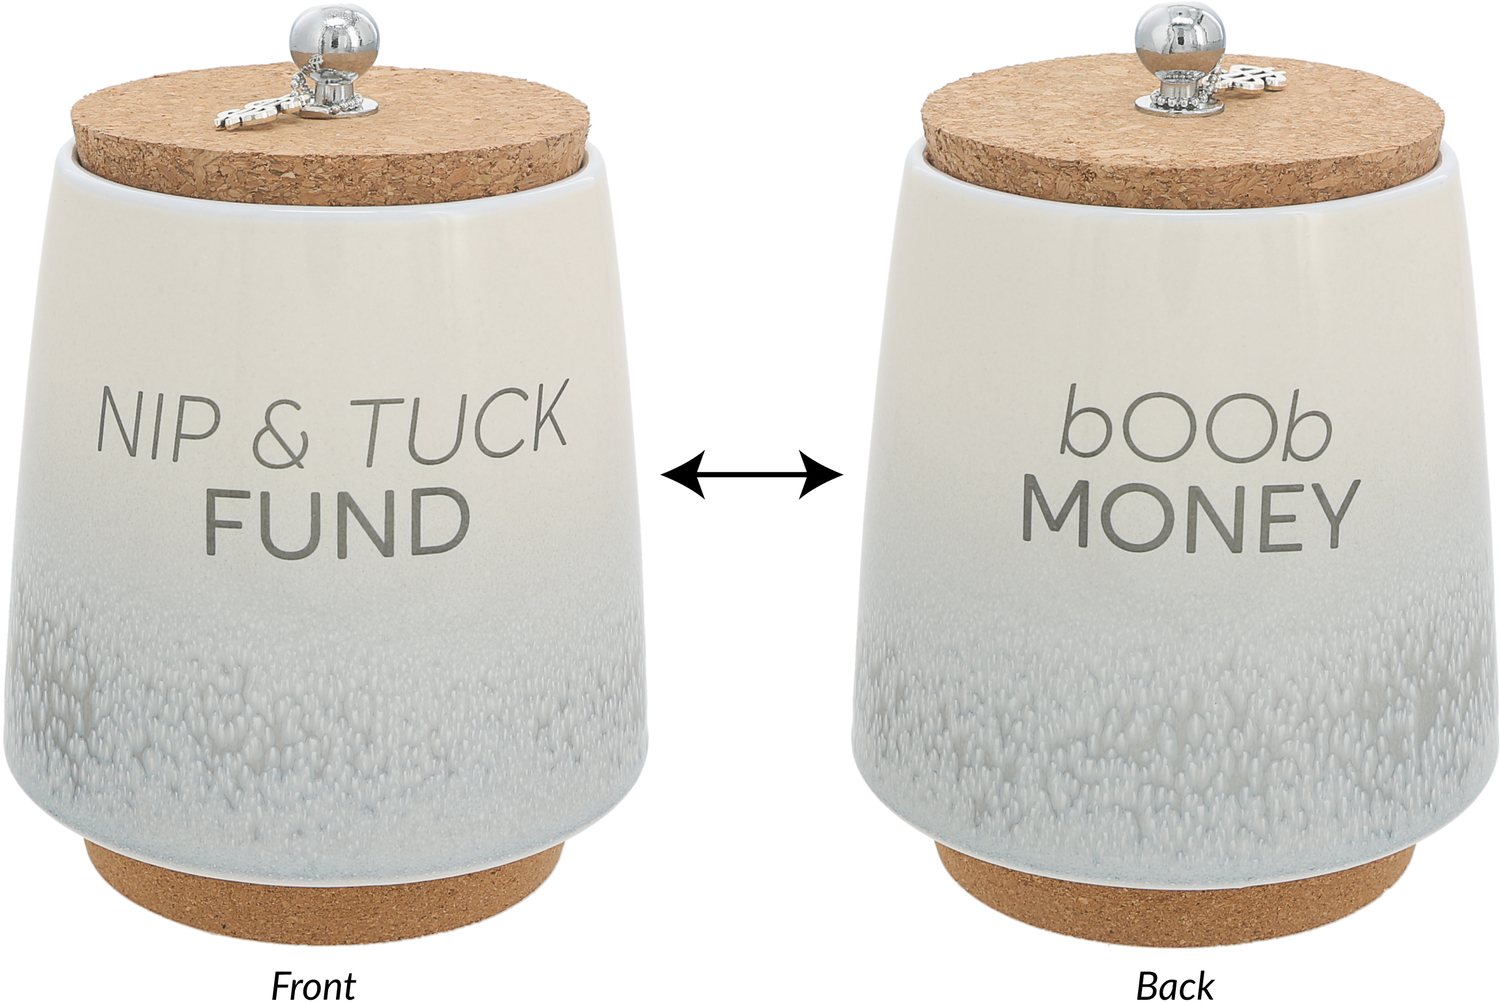 Nip & Tuck by So Much Fun-d - Nip & Tuck - 6.5" Ceramic Savings Bank